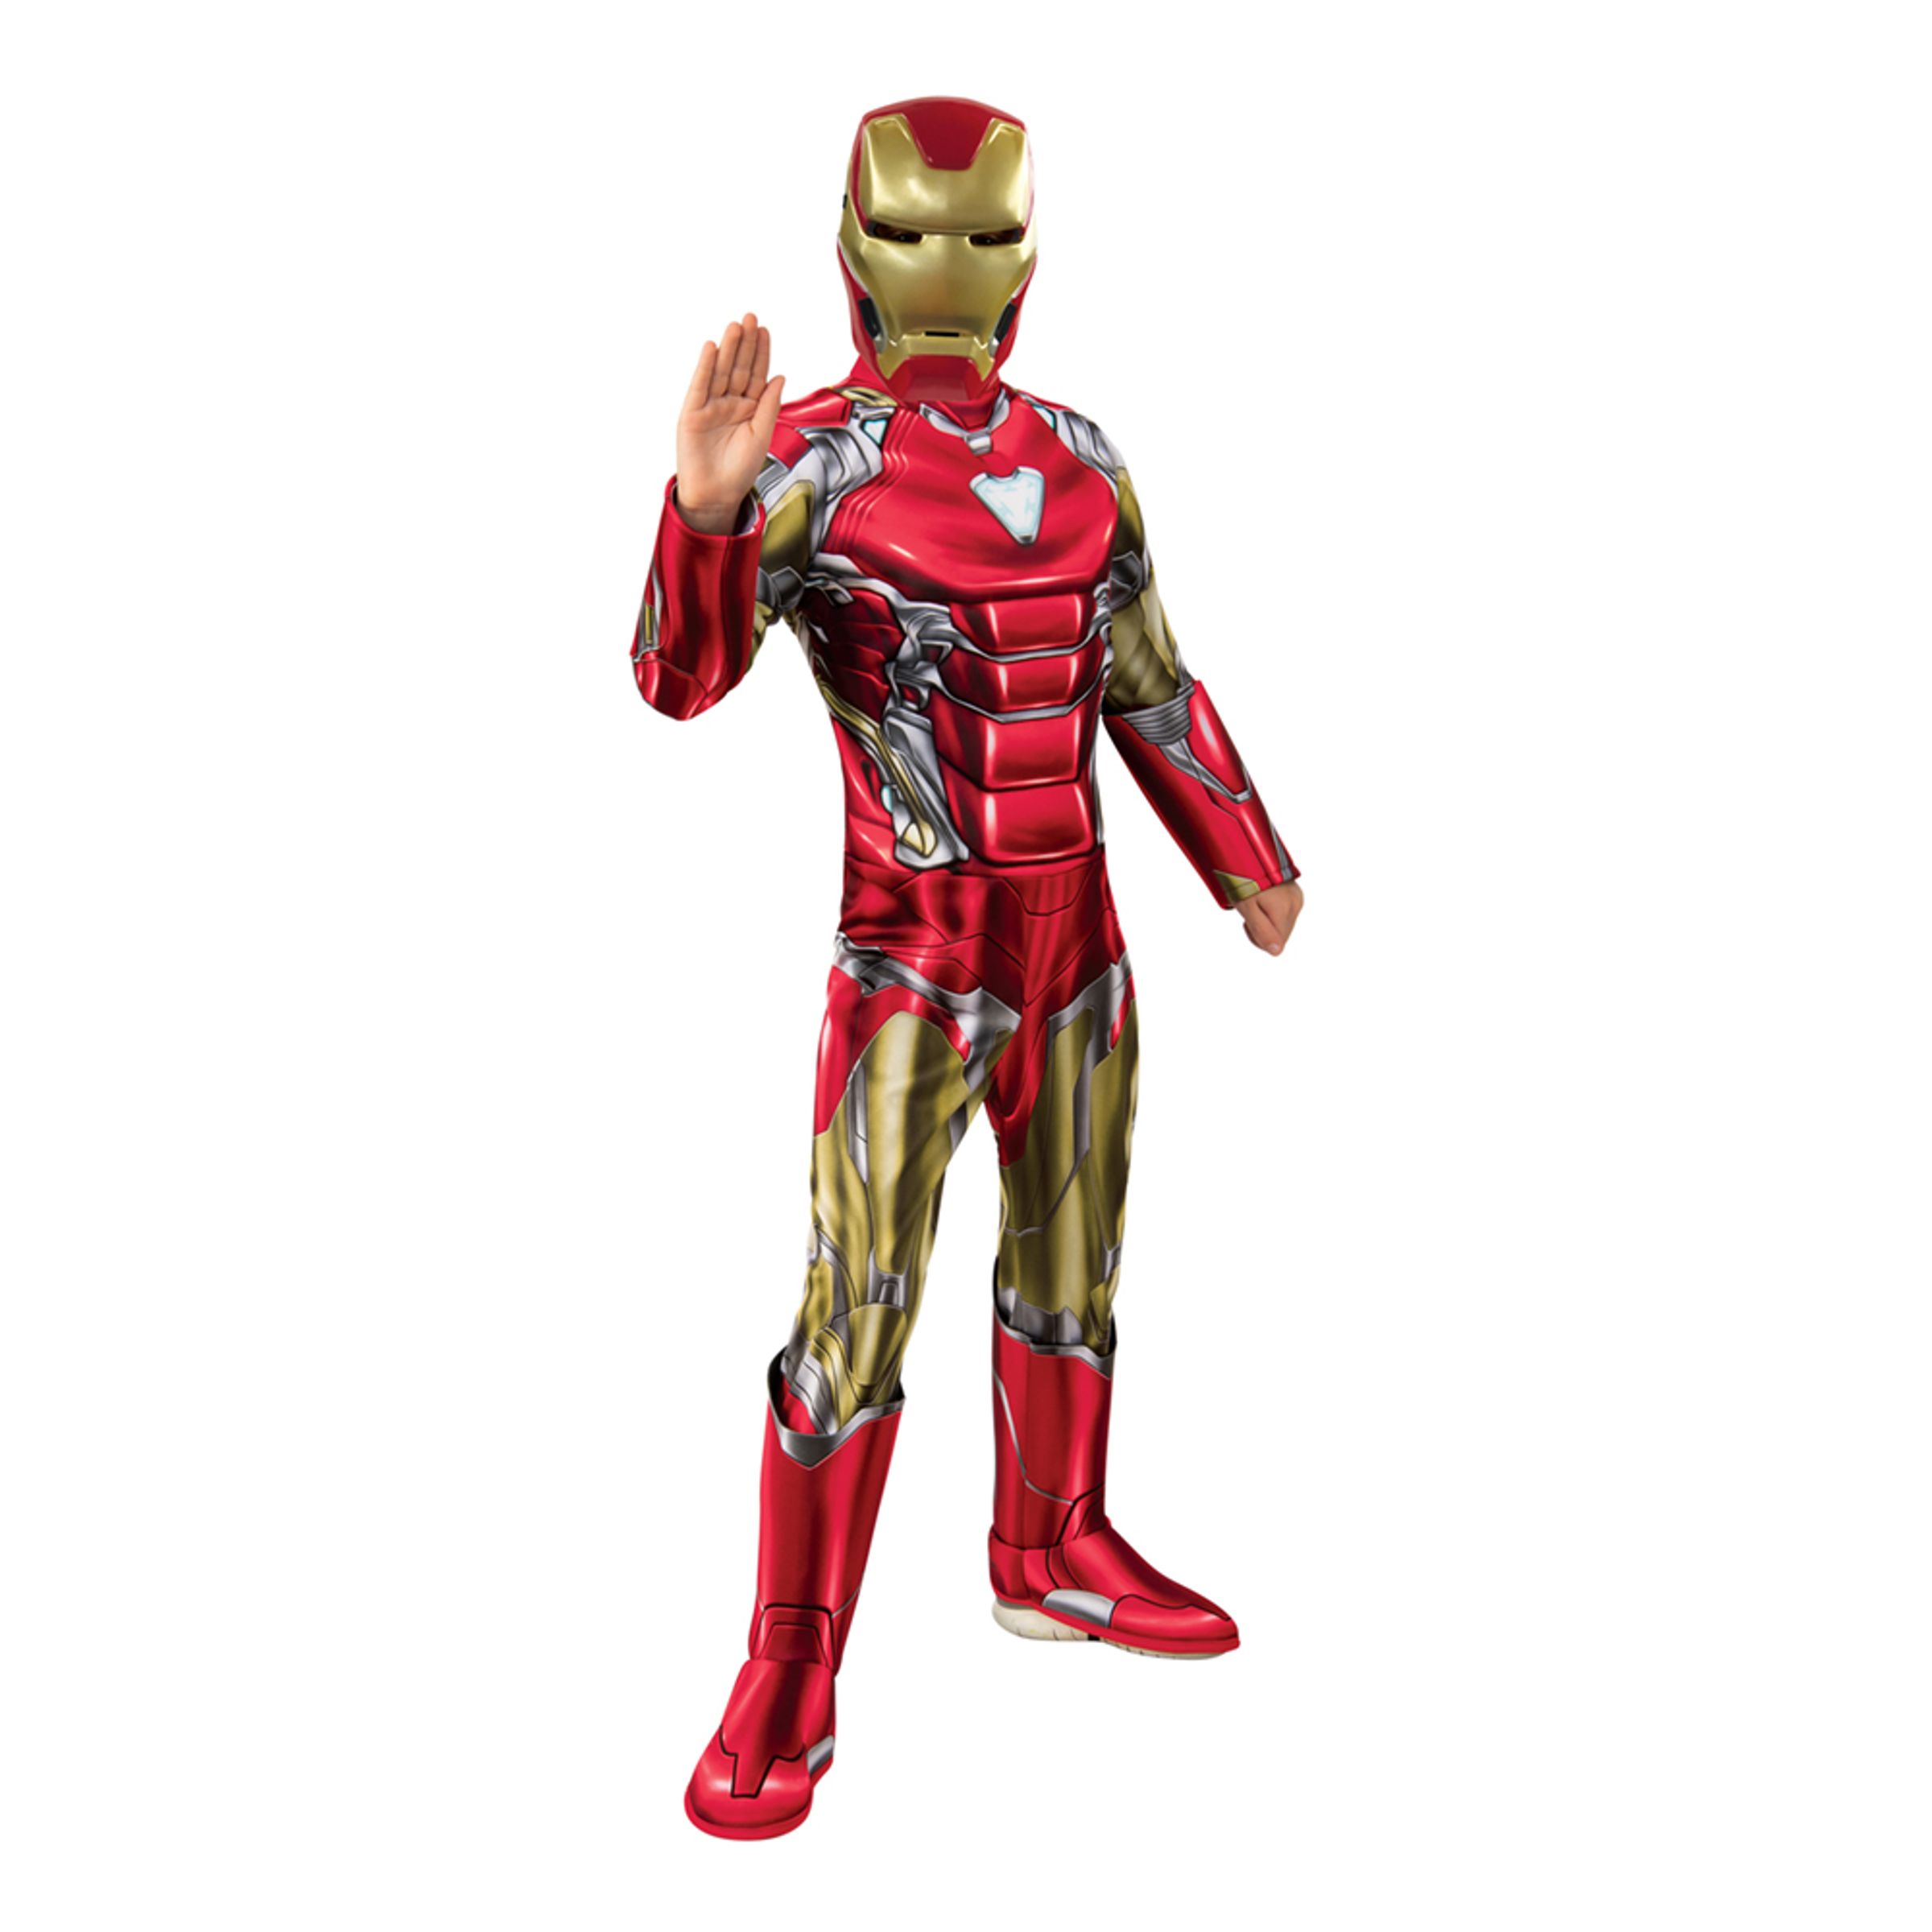 Avengers 4 Iron Man Deluxe Barn Maskeraddräkt - Small